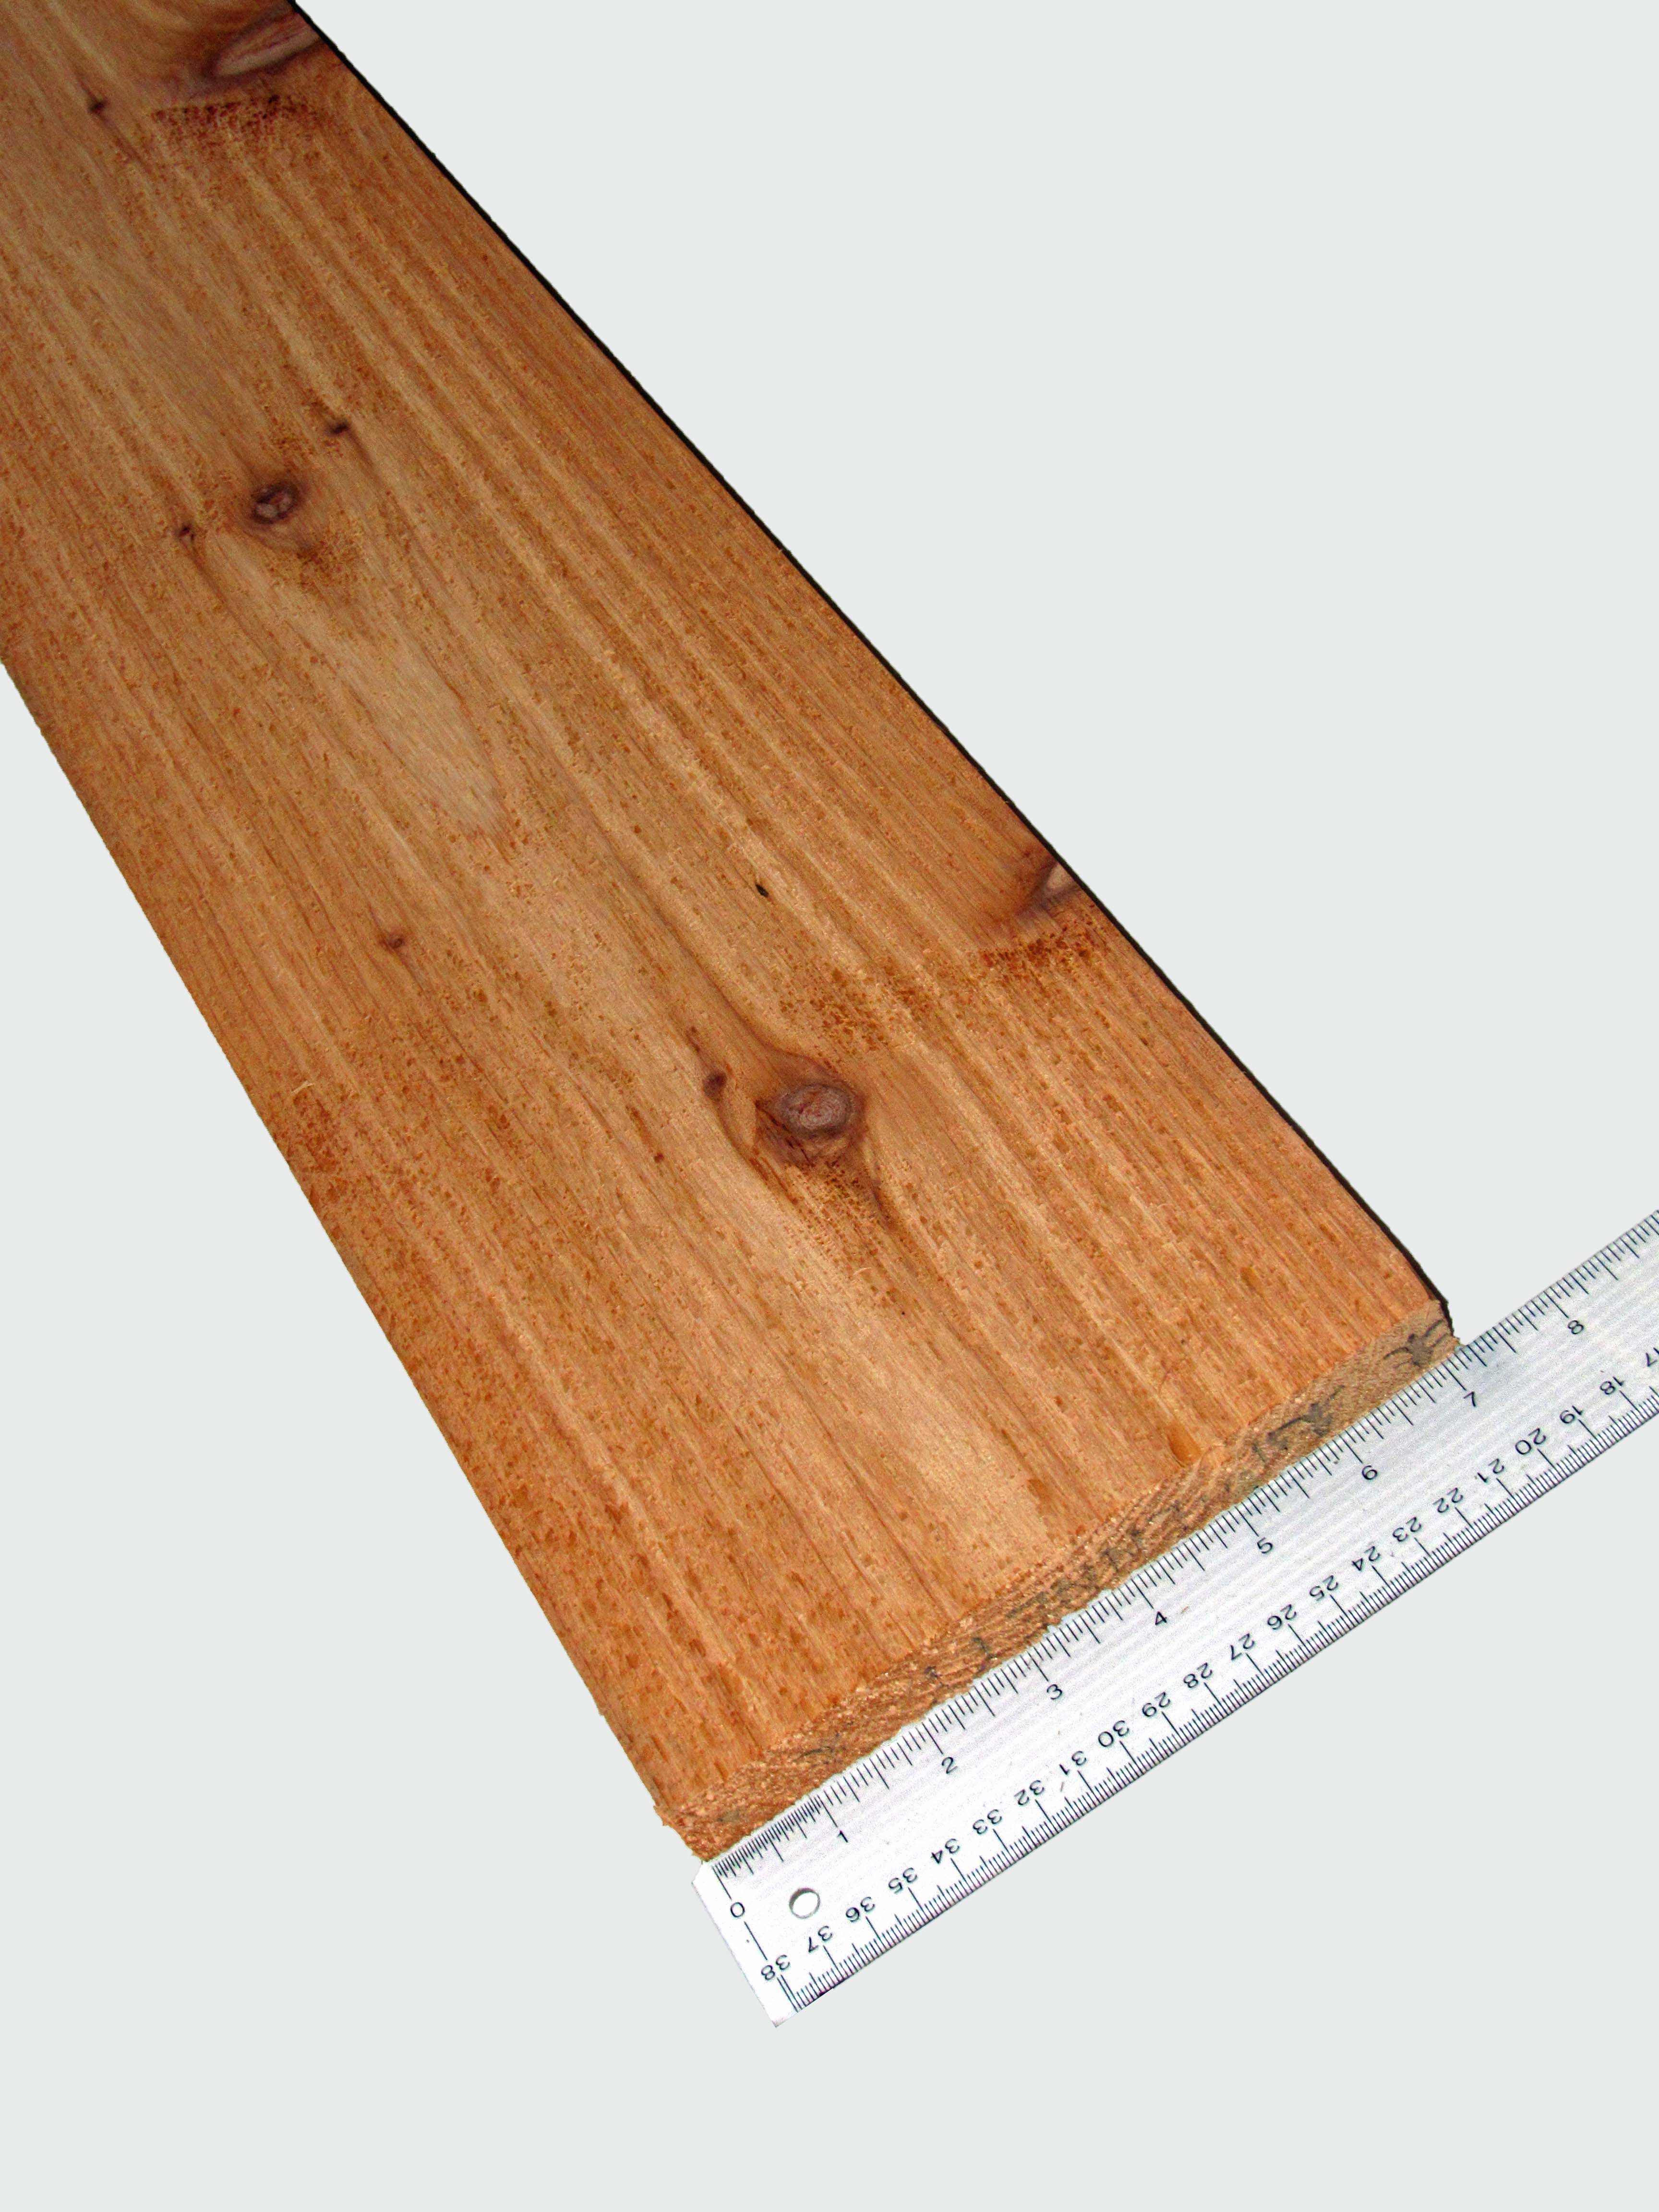 Spanish Cedar Lumber  2 at  1" X 10" X 1/8"  planed 4 sides 